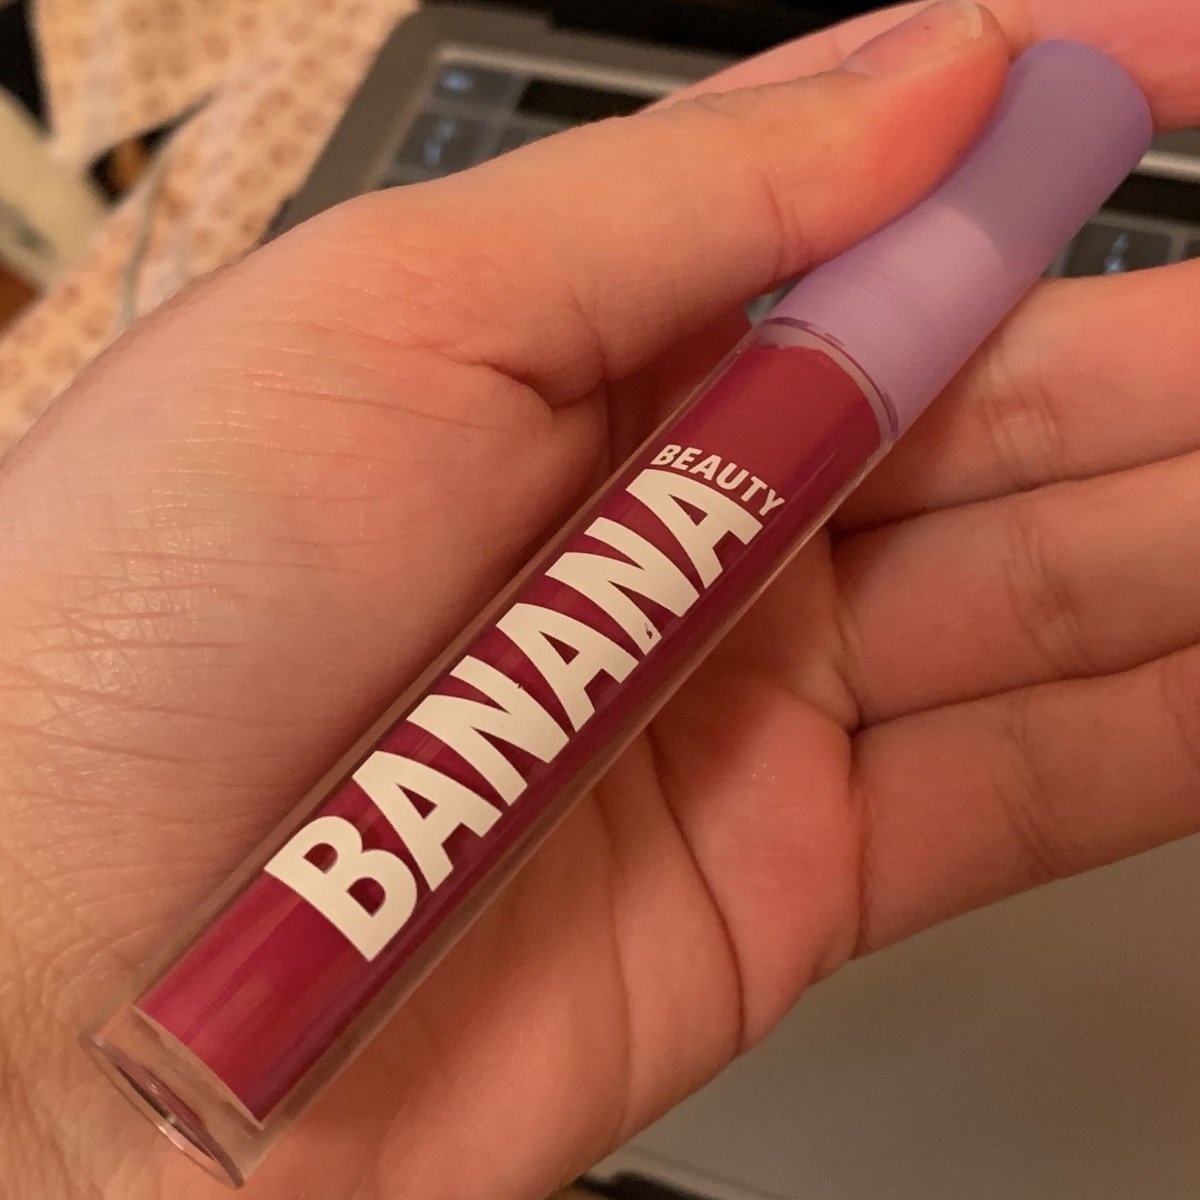 Banana beauty Liquid lipstick berry bomb Review